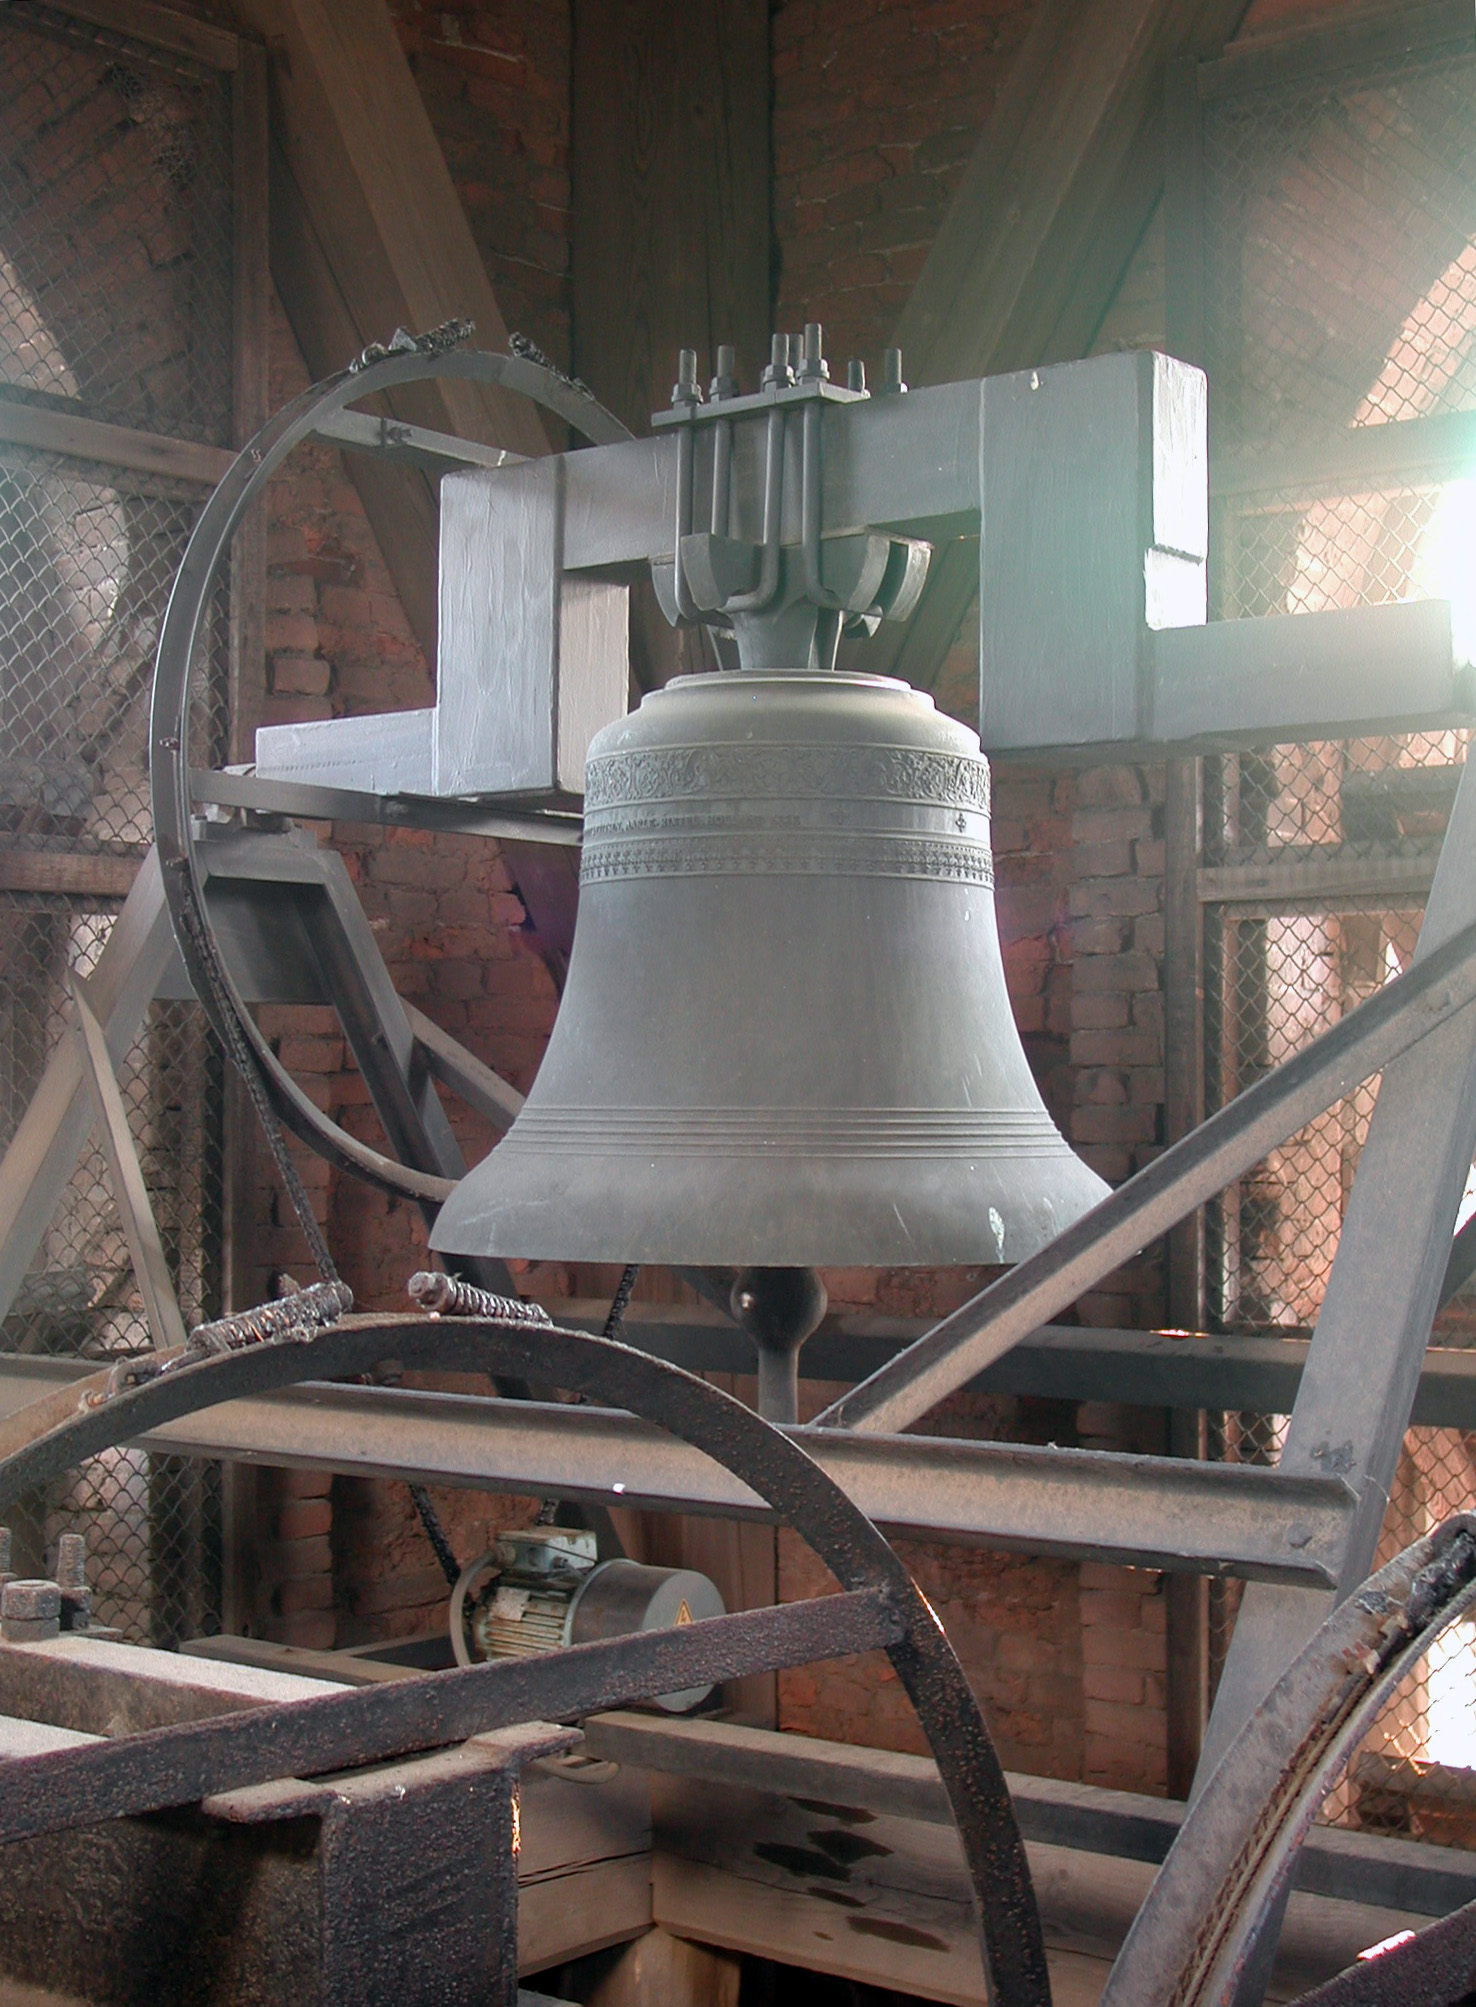 church bells | File:Church bell erp.jpg - Wikipedia, the free ...